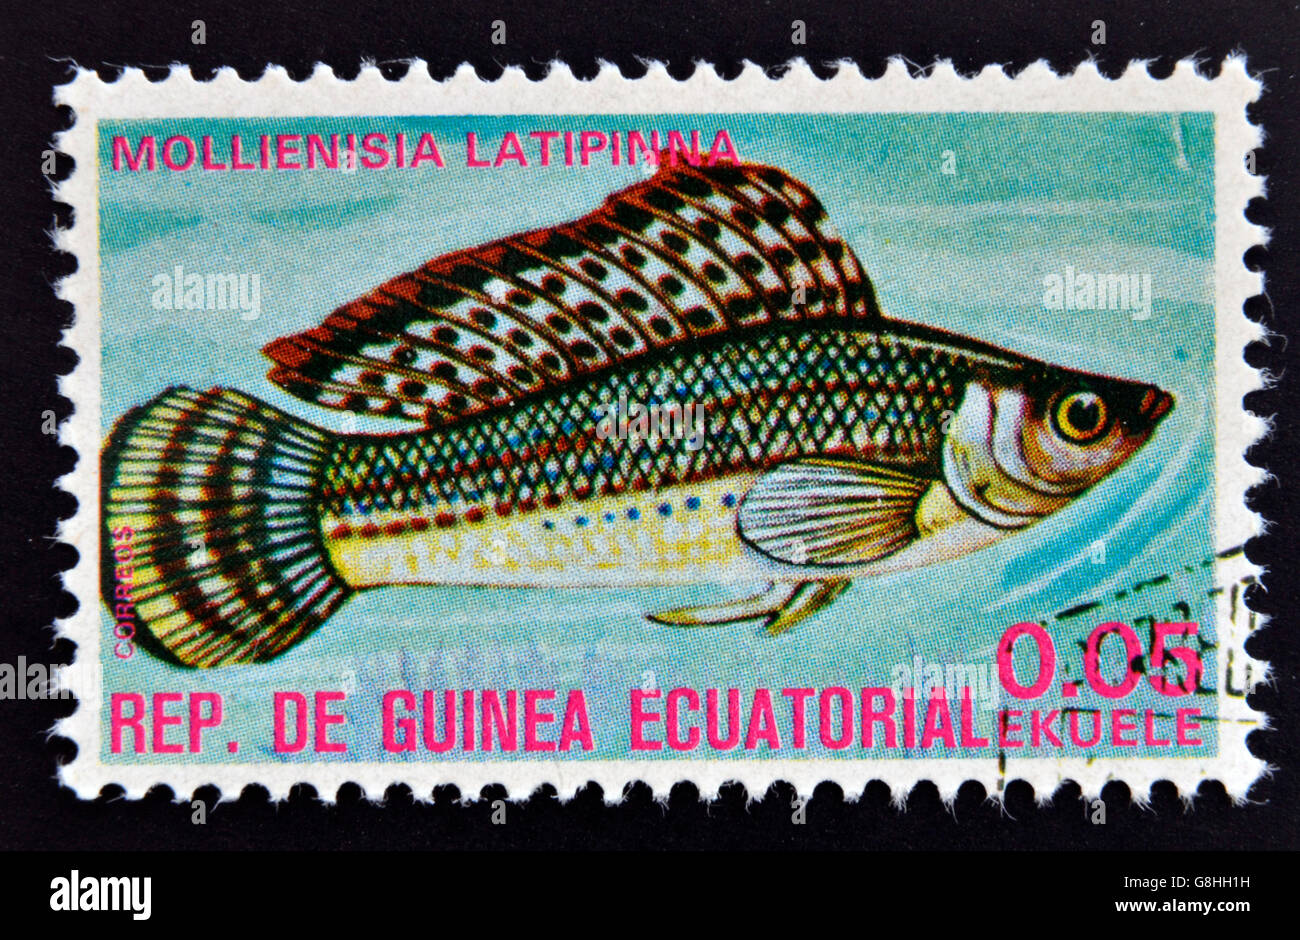 EQUATORIAL GUINEA - CIRCA 1974: A stamp printed in Guinea Ecuatorial dedicated to exotic fish shows mollienisia latipinna, circa Stock Photo